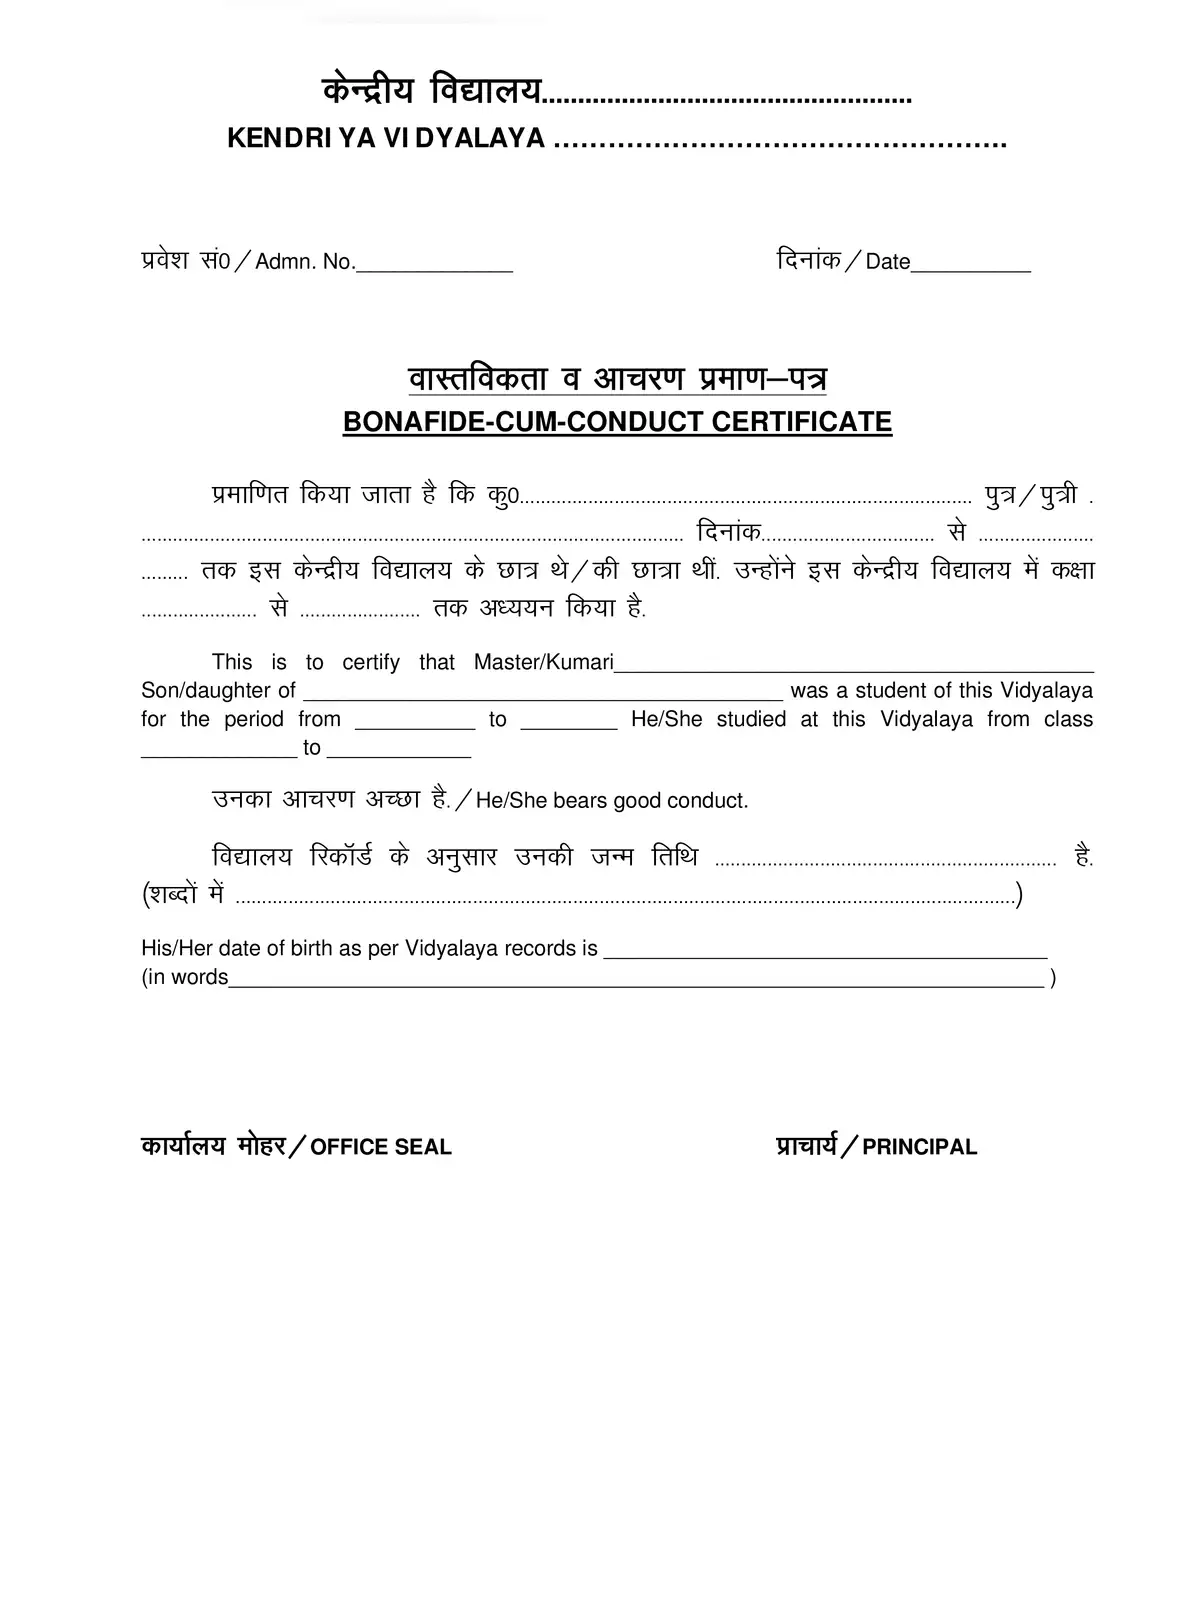 kvs-bonafide-cum-conduct-certificate-pdf